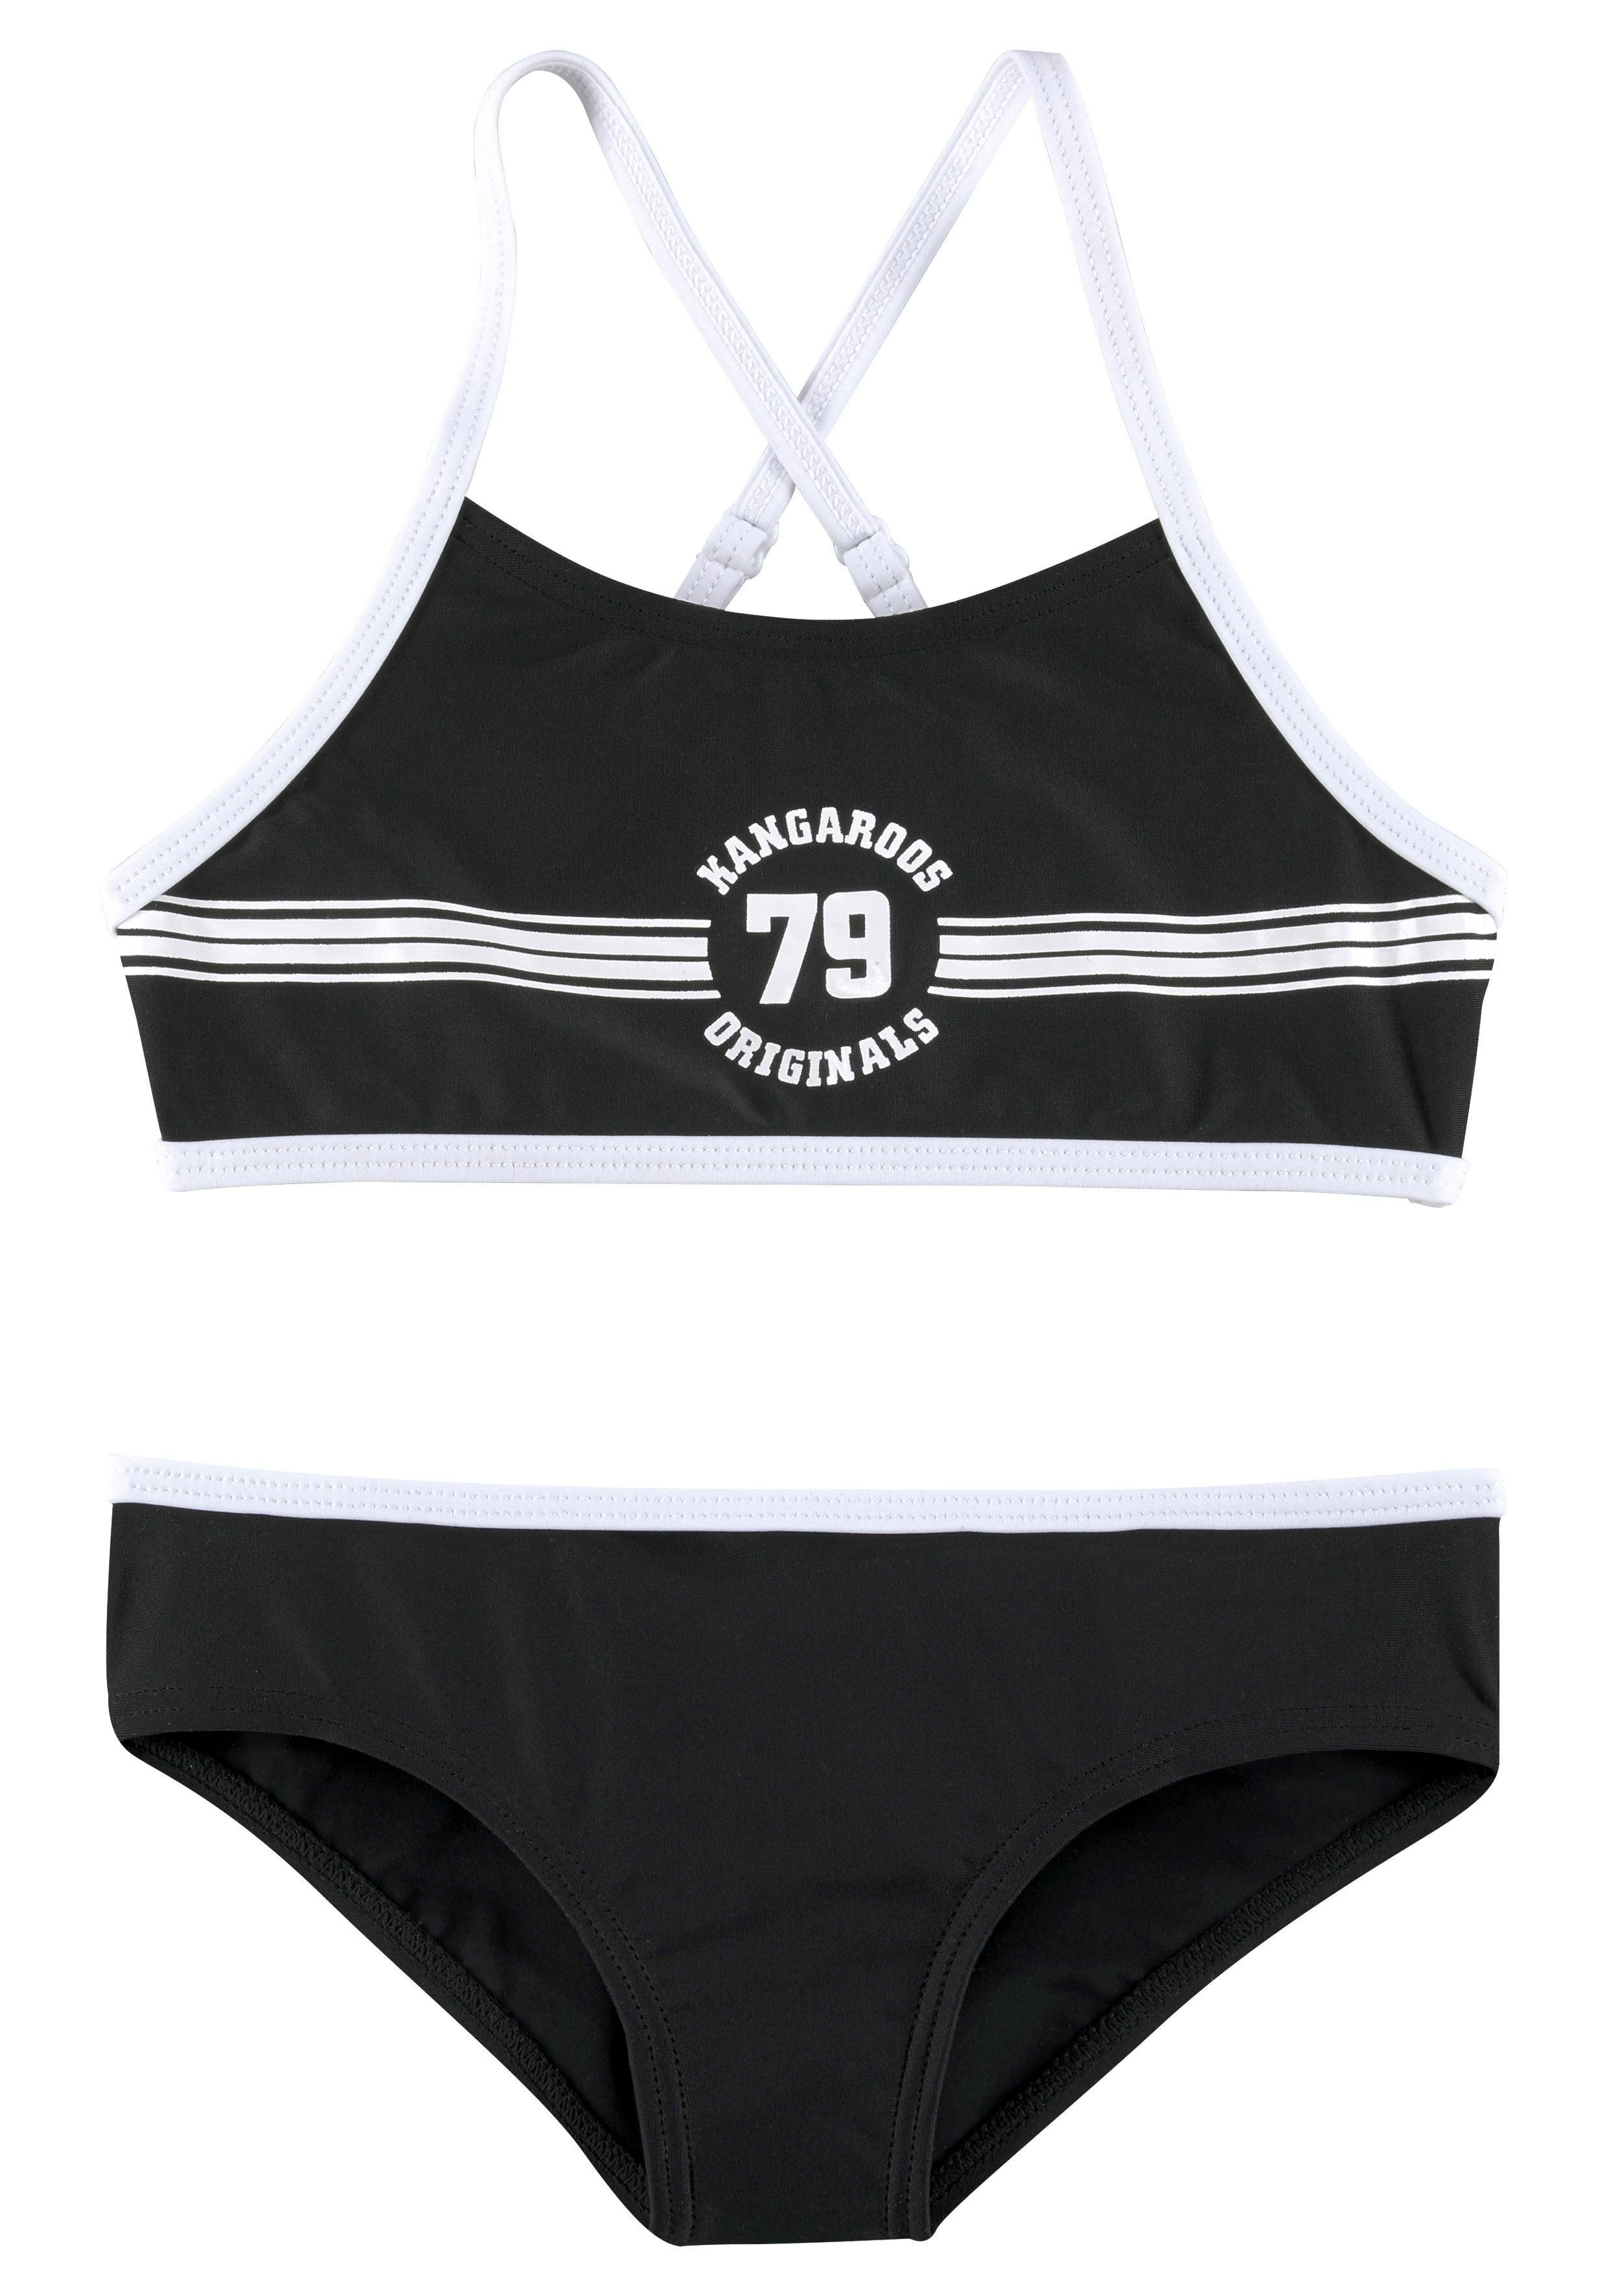 KangaROOS Bustier-Bikini Sporty sportlichem Frontdruck mit schwarz